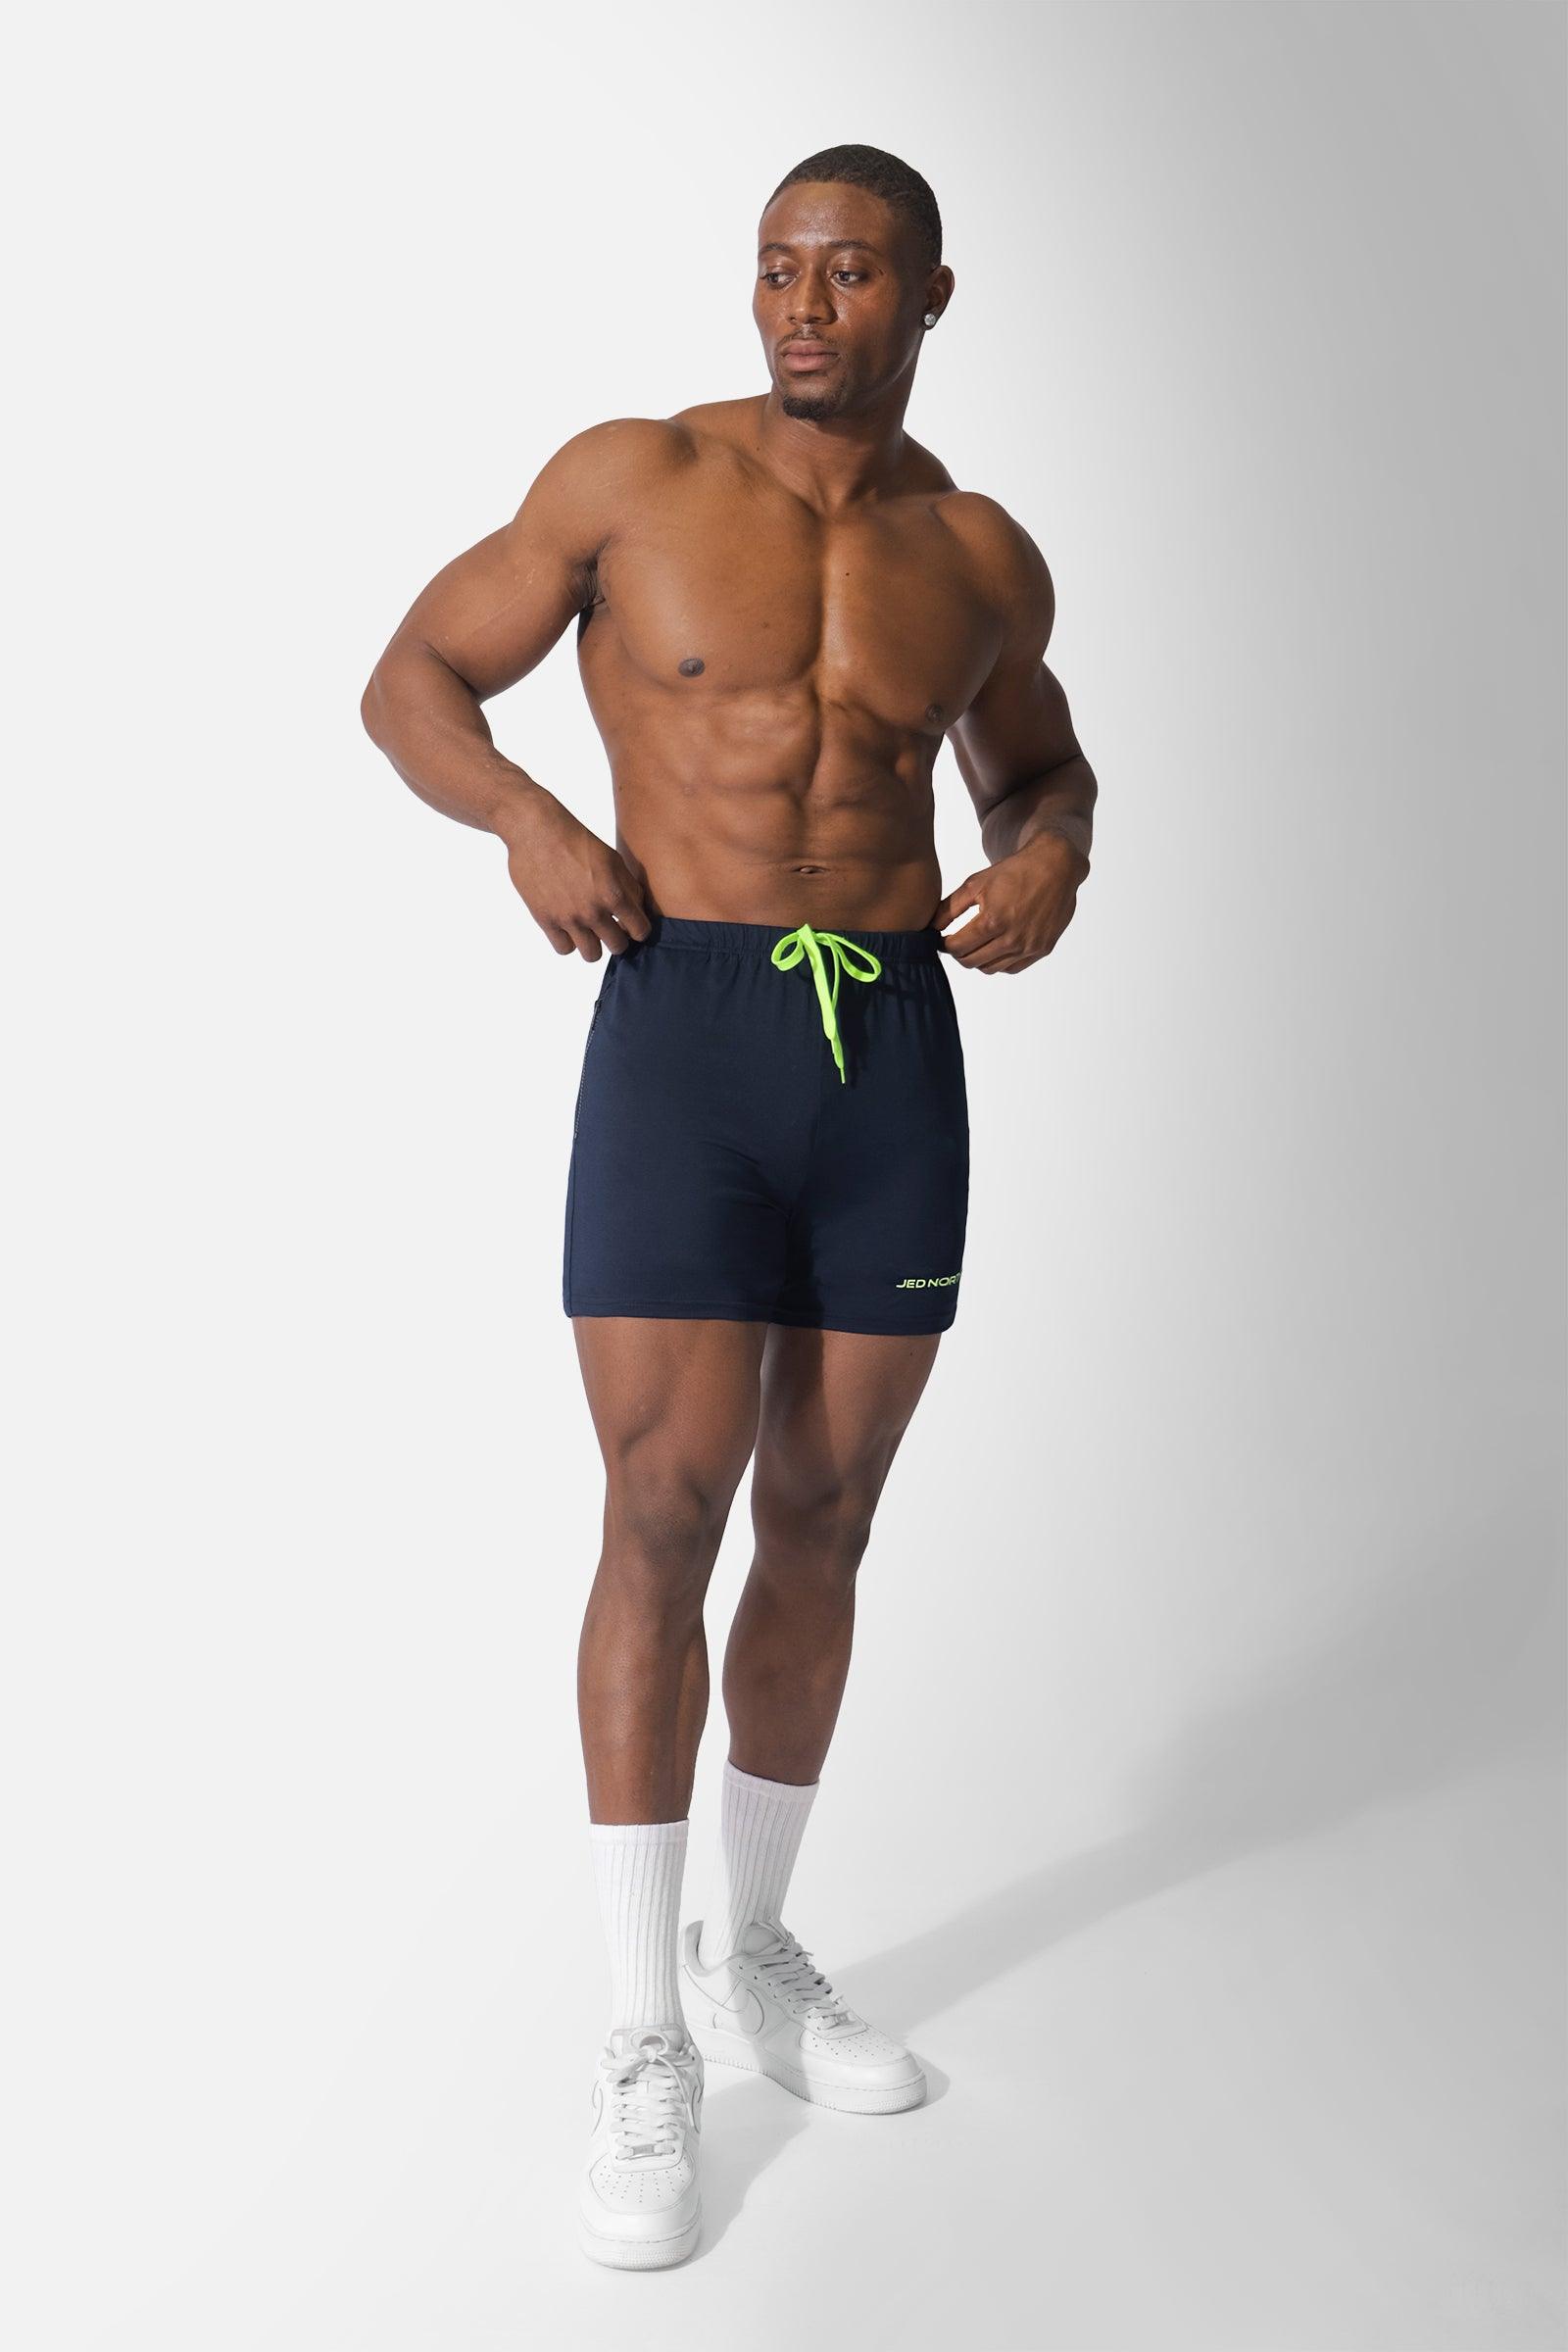 Agile Bodybuilding 4'' Shorts w Zipper Pockets - Navy Blue - Jed North Canada